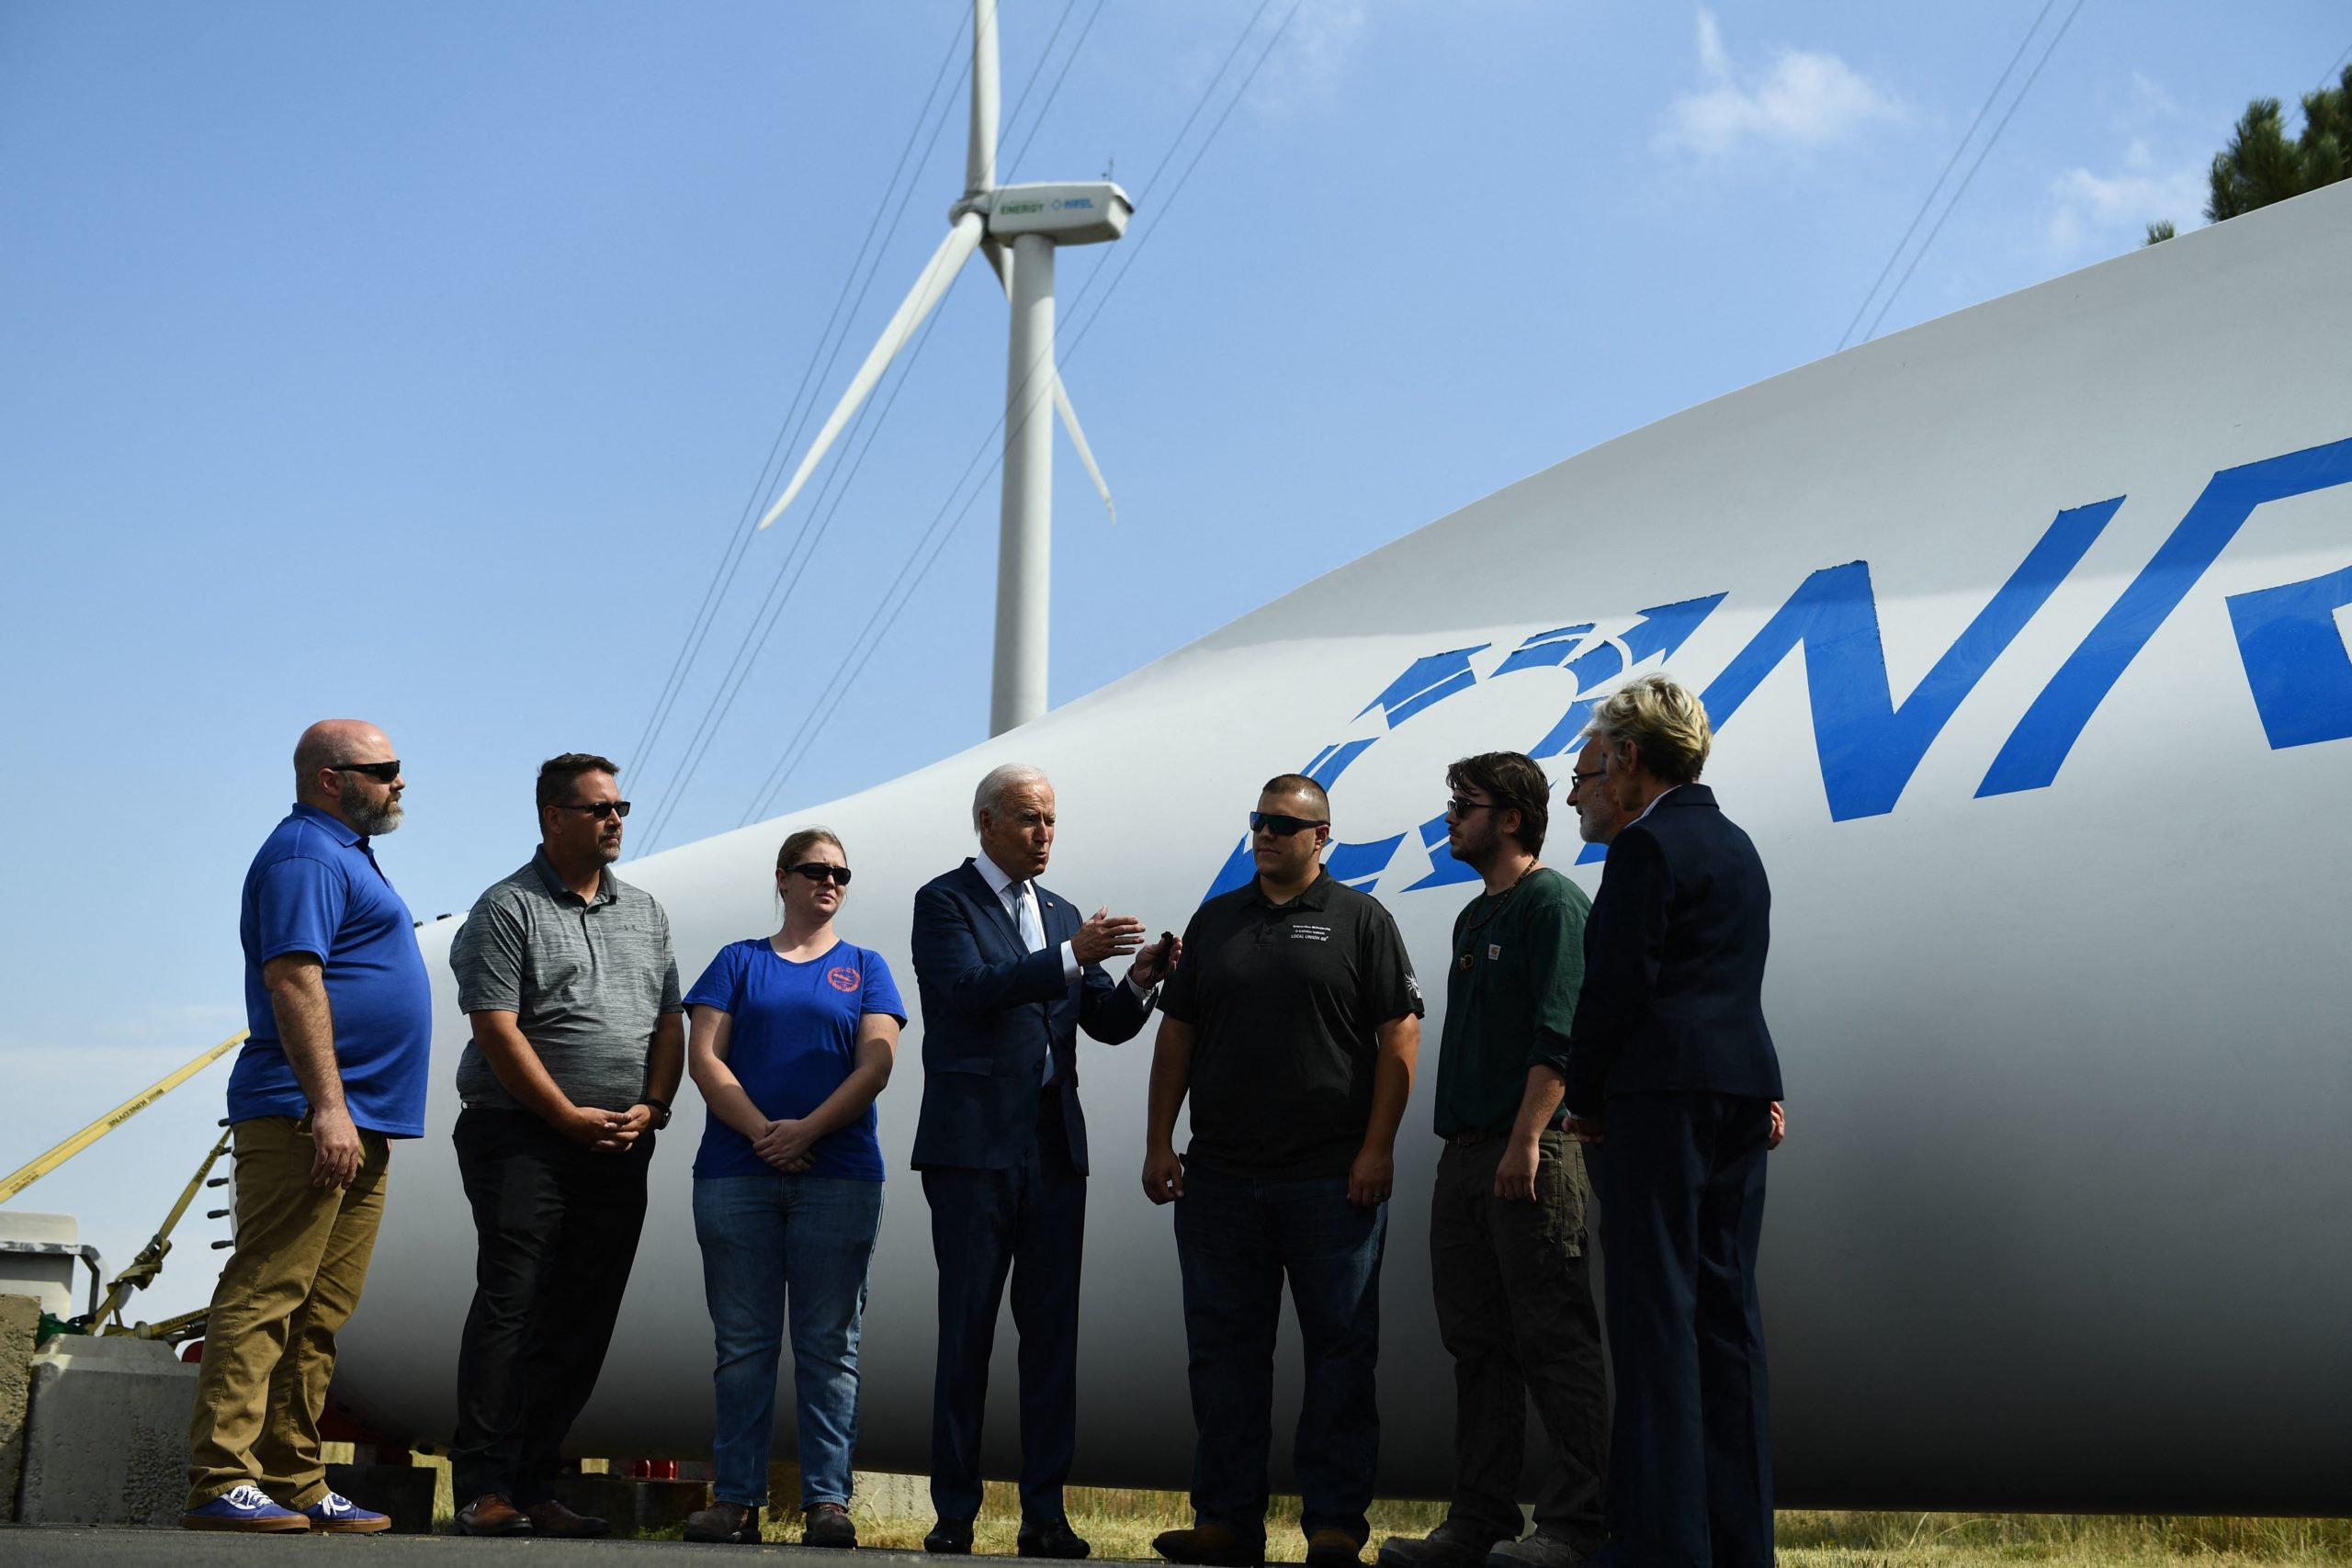 President Joe Biden tours the National Renewable Energy Laboratory in Arvada, Colorado on Sept. 14. (Brendan Smialowski/AFP via Getty Images)